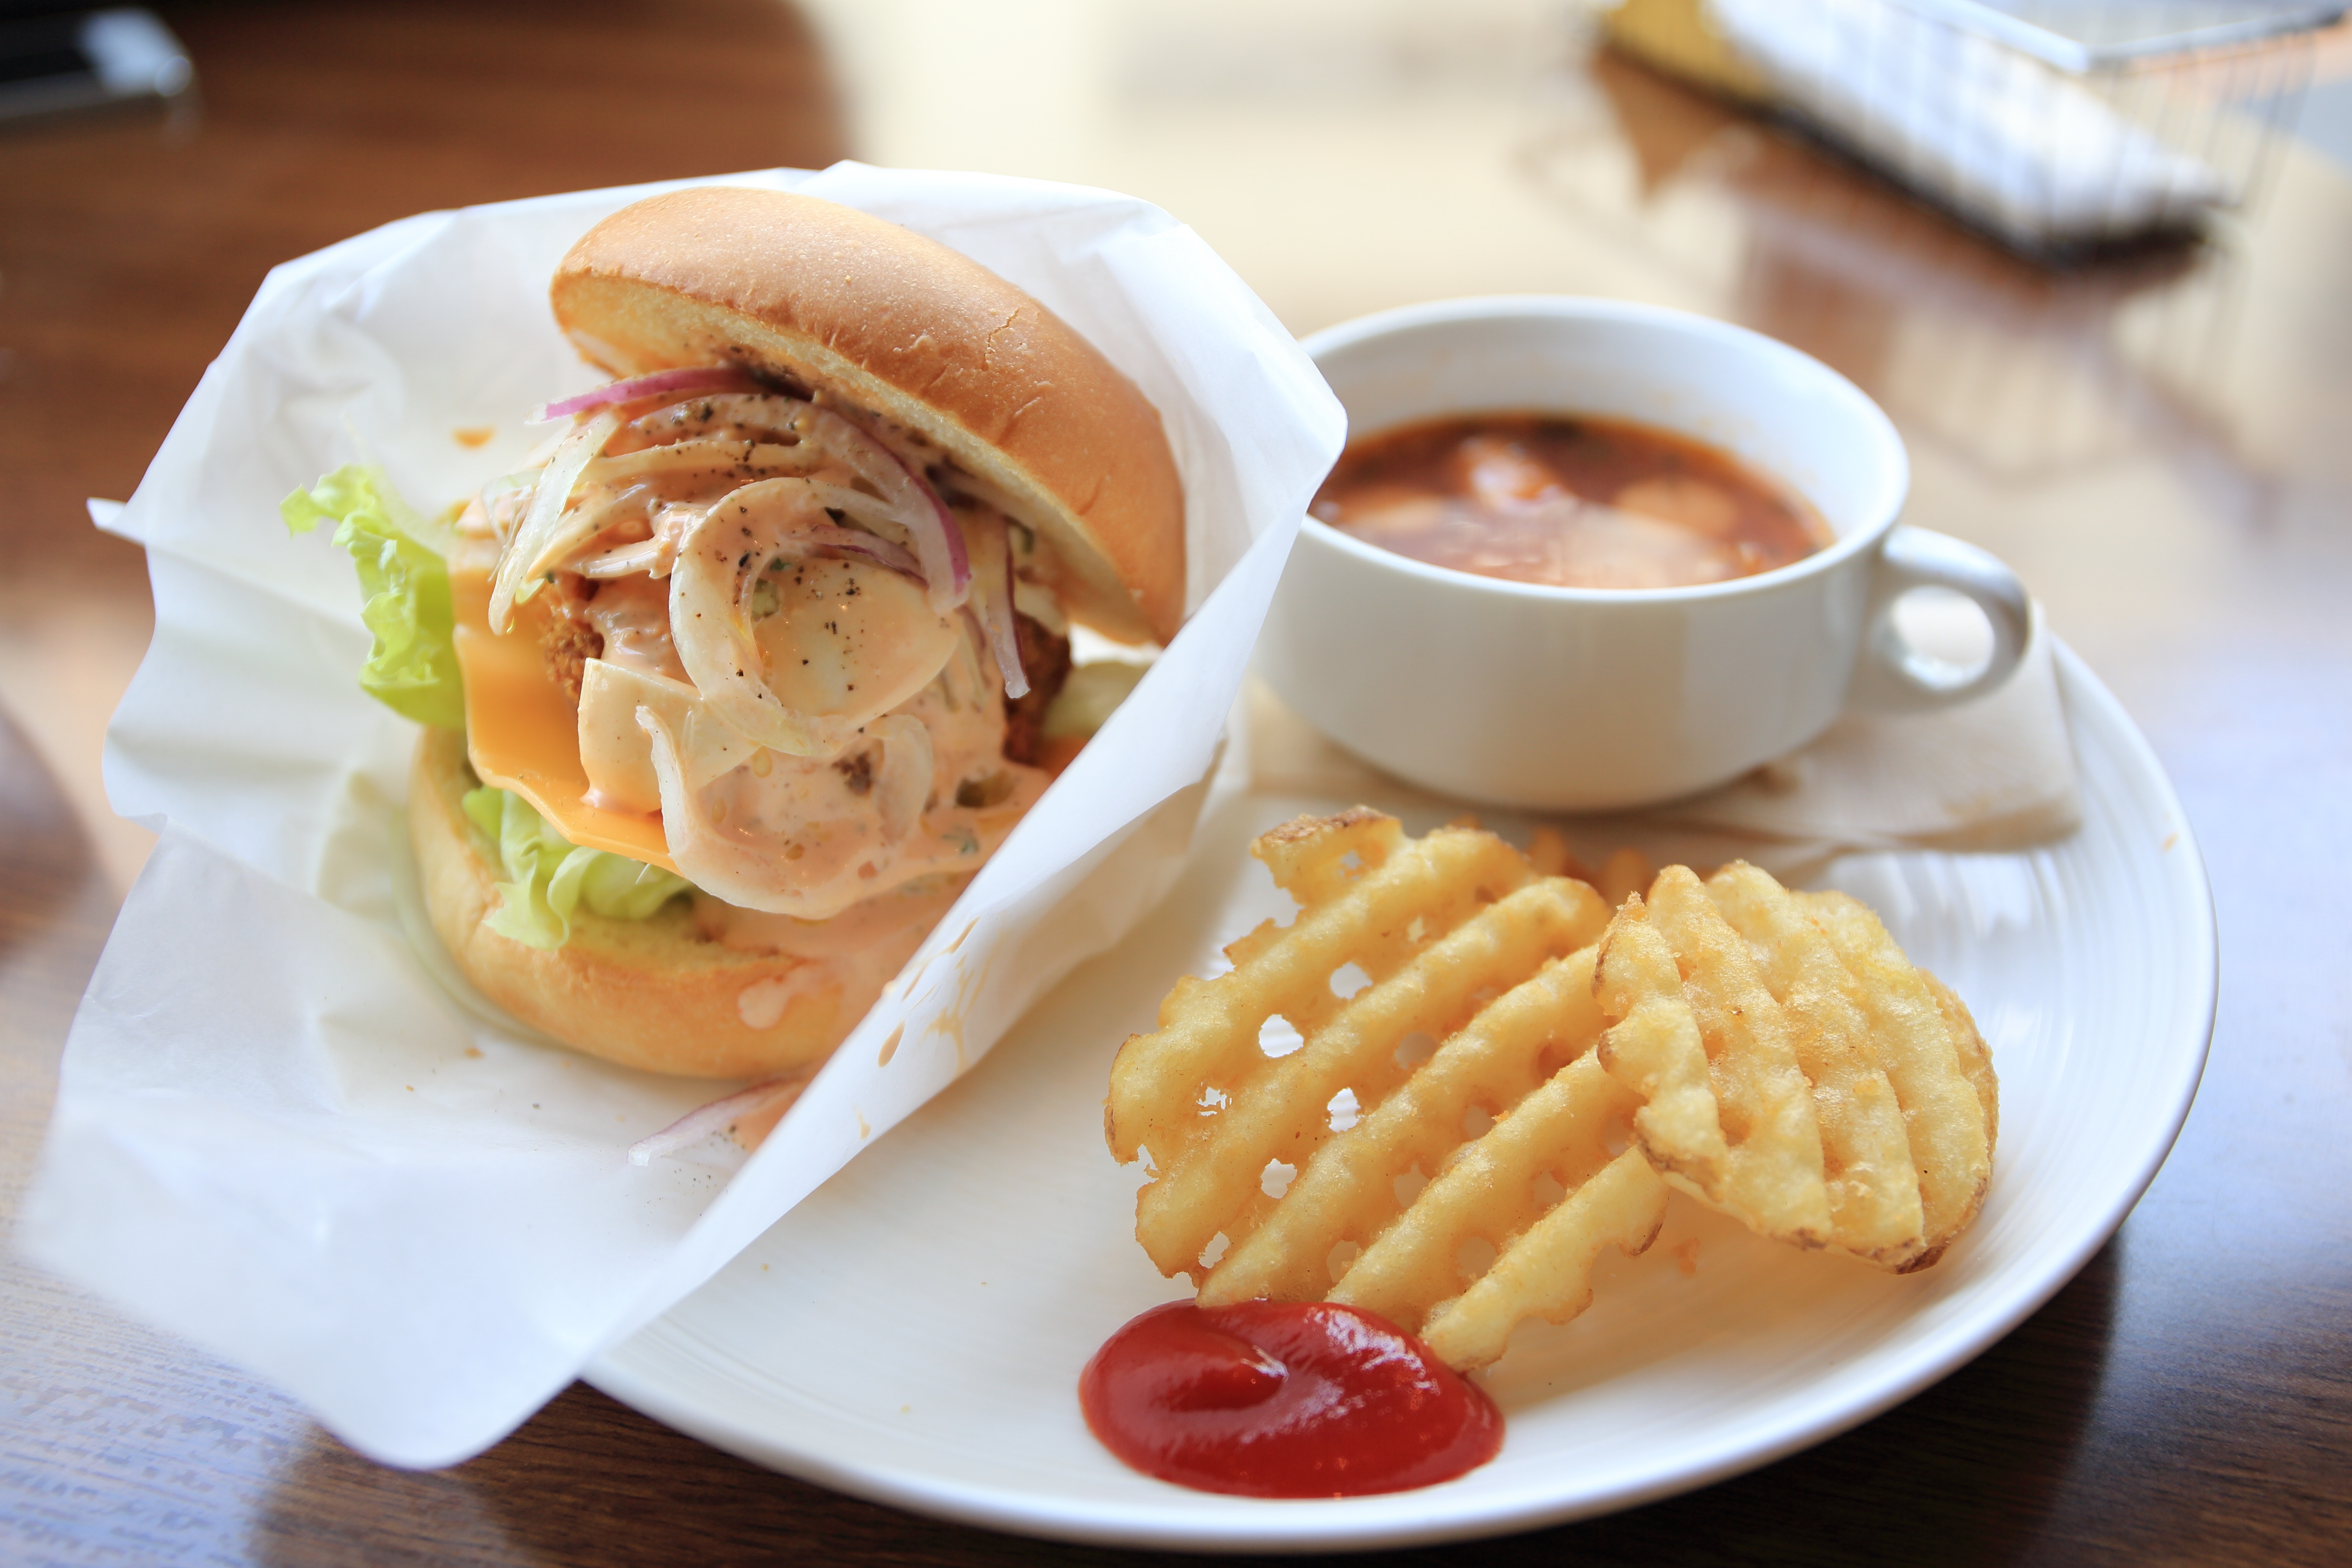 Lunch, Brunch, Burger, Chips, Food, HQ Photo